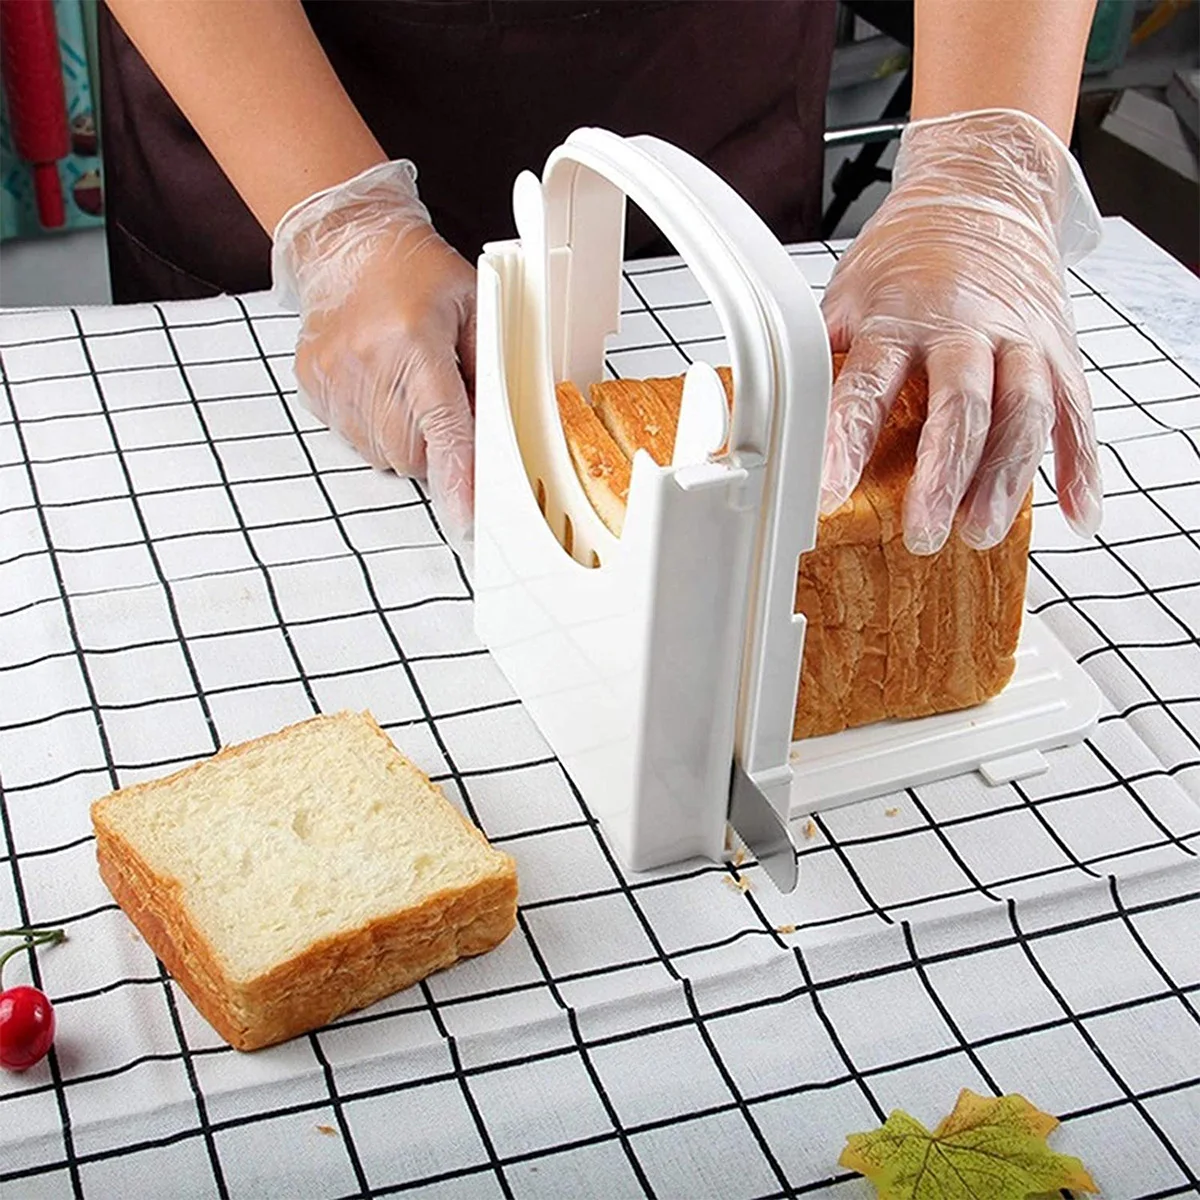 https://ae01.alicdn.com/kf/Sc3e3f344046b4184b33866a6ca4c890at/Collapsible-bread-slicer-adjustable-toast-slicer-tool-plastic-bread-cutting-guide-Homemade-bread-kitchen-baking-tool.jpg